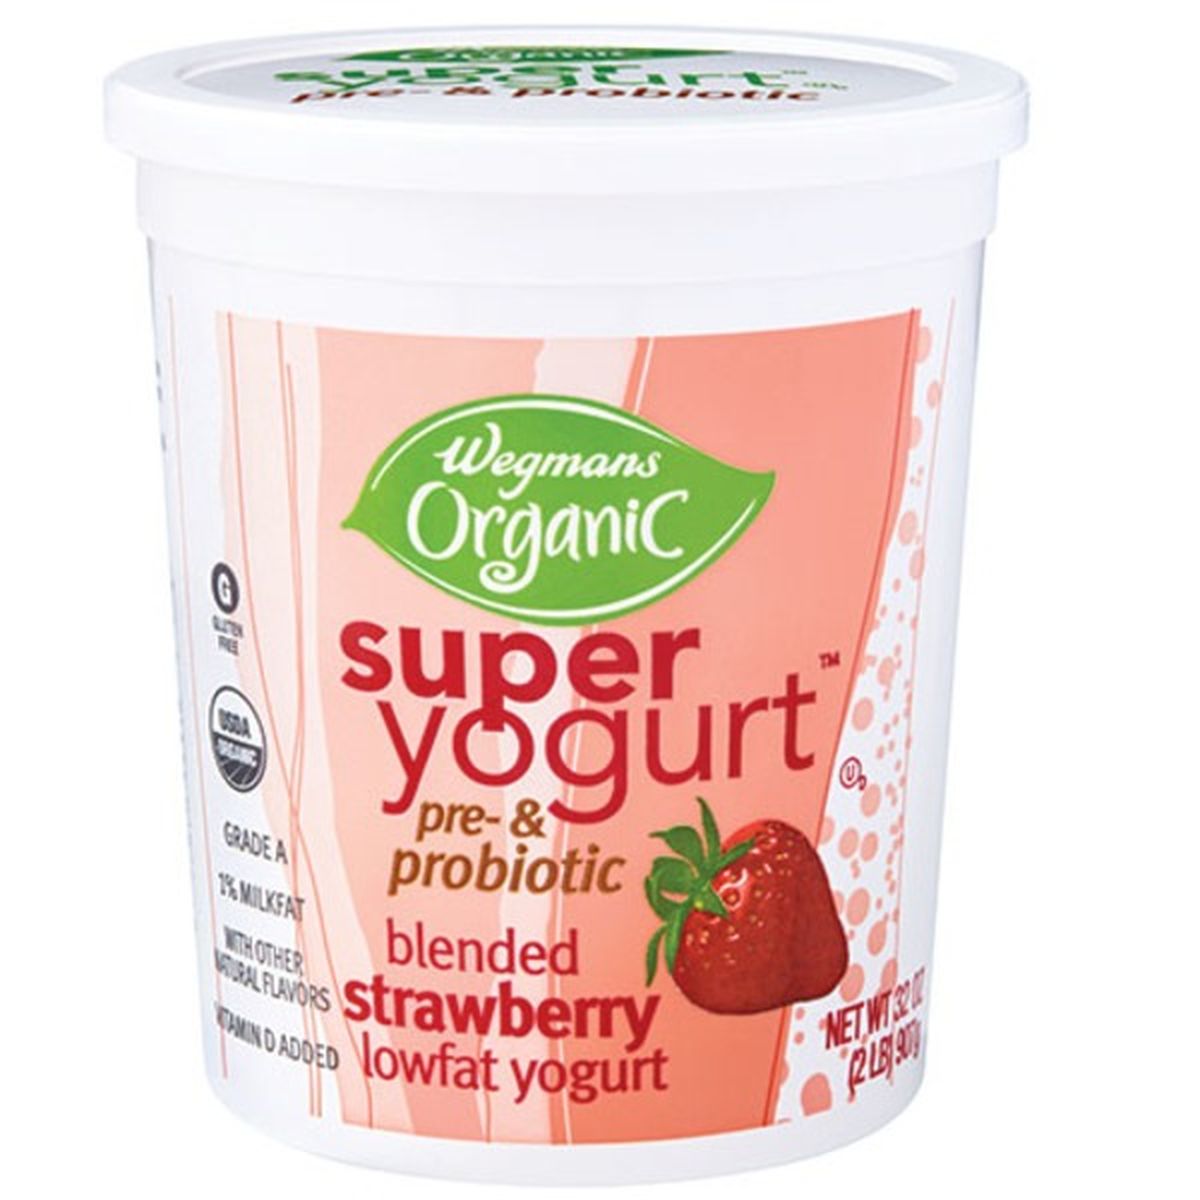 Calories in Wegmans Organic Super Yogurt Lowfat Strawberry Super Yogurt